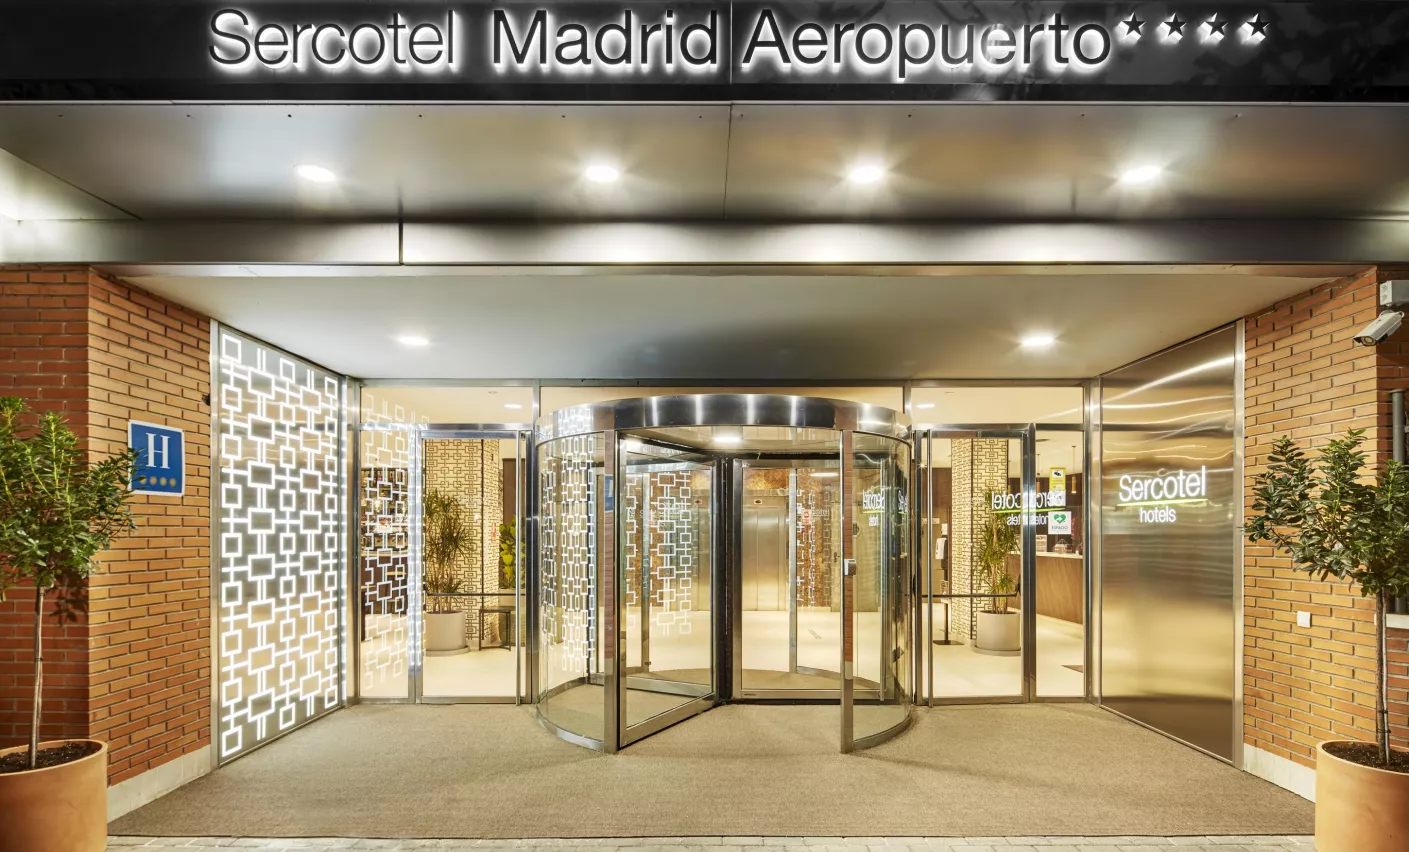 Sercotel Madrid Aeropuerto